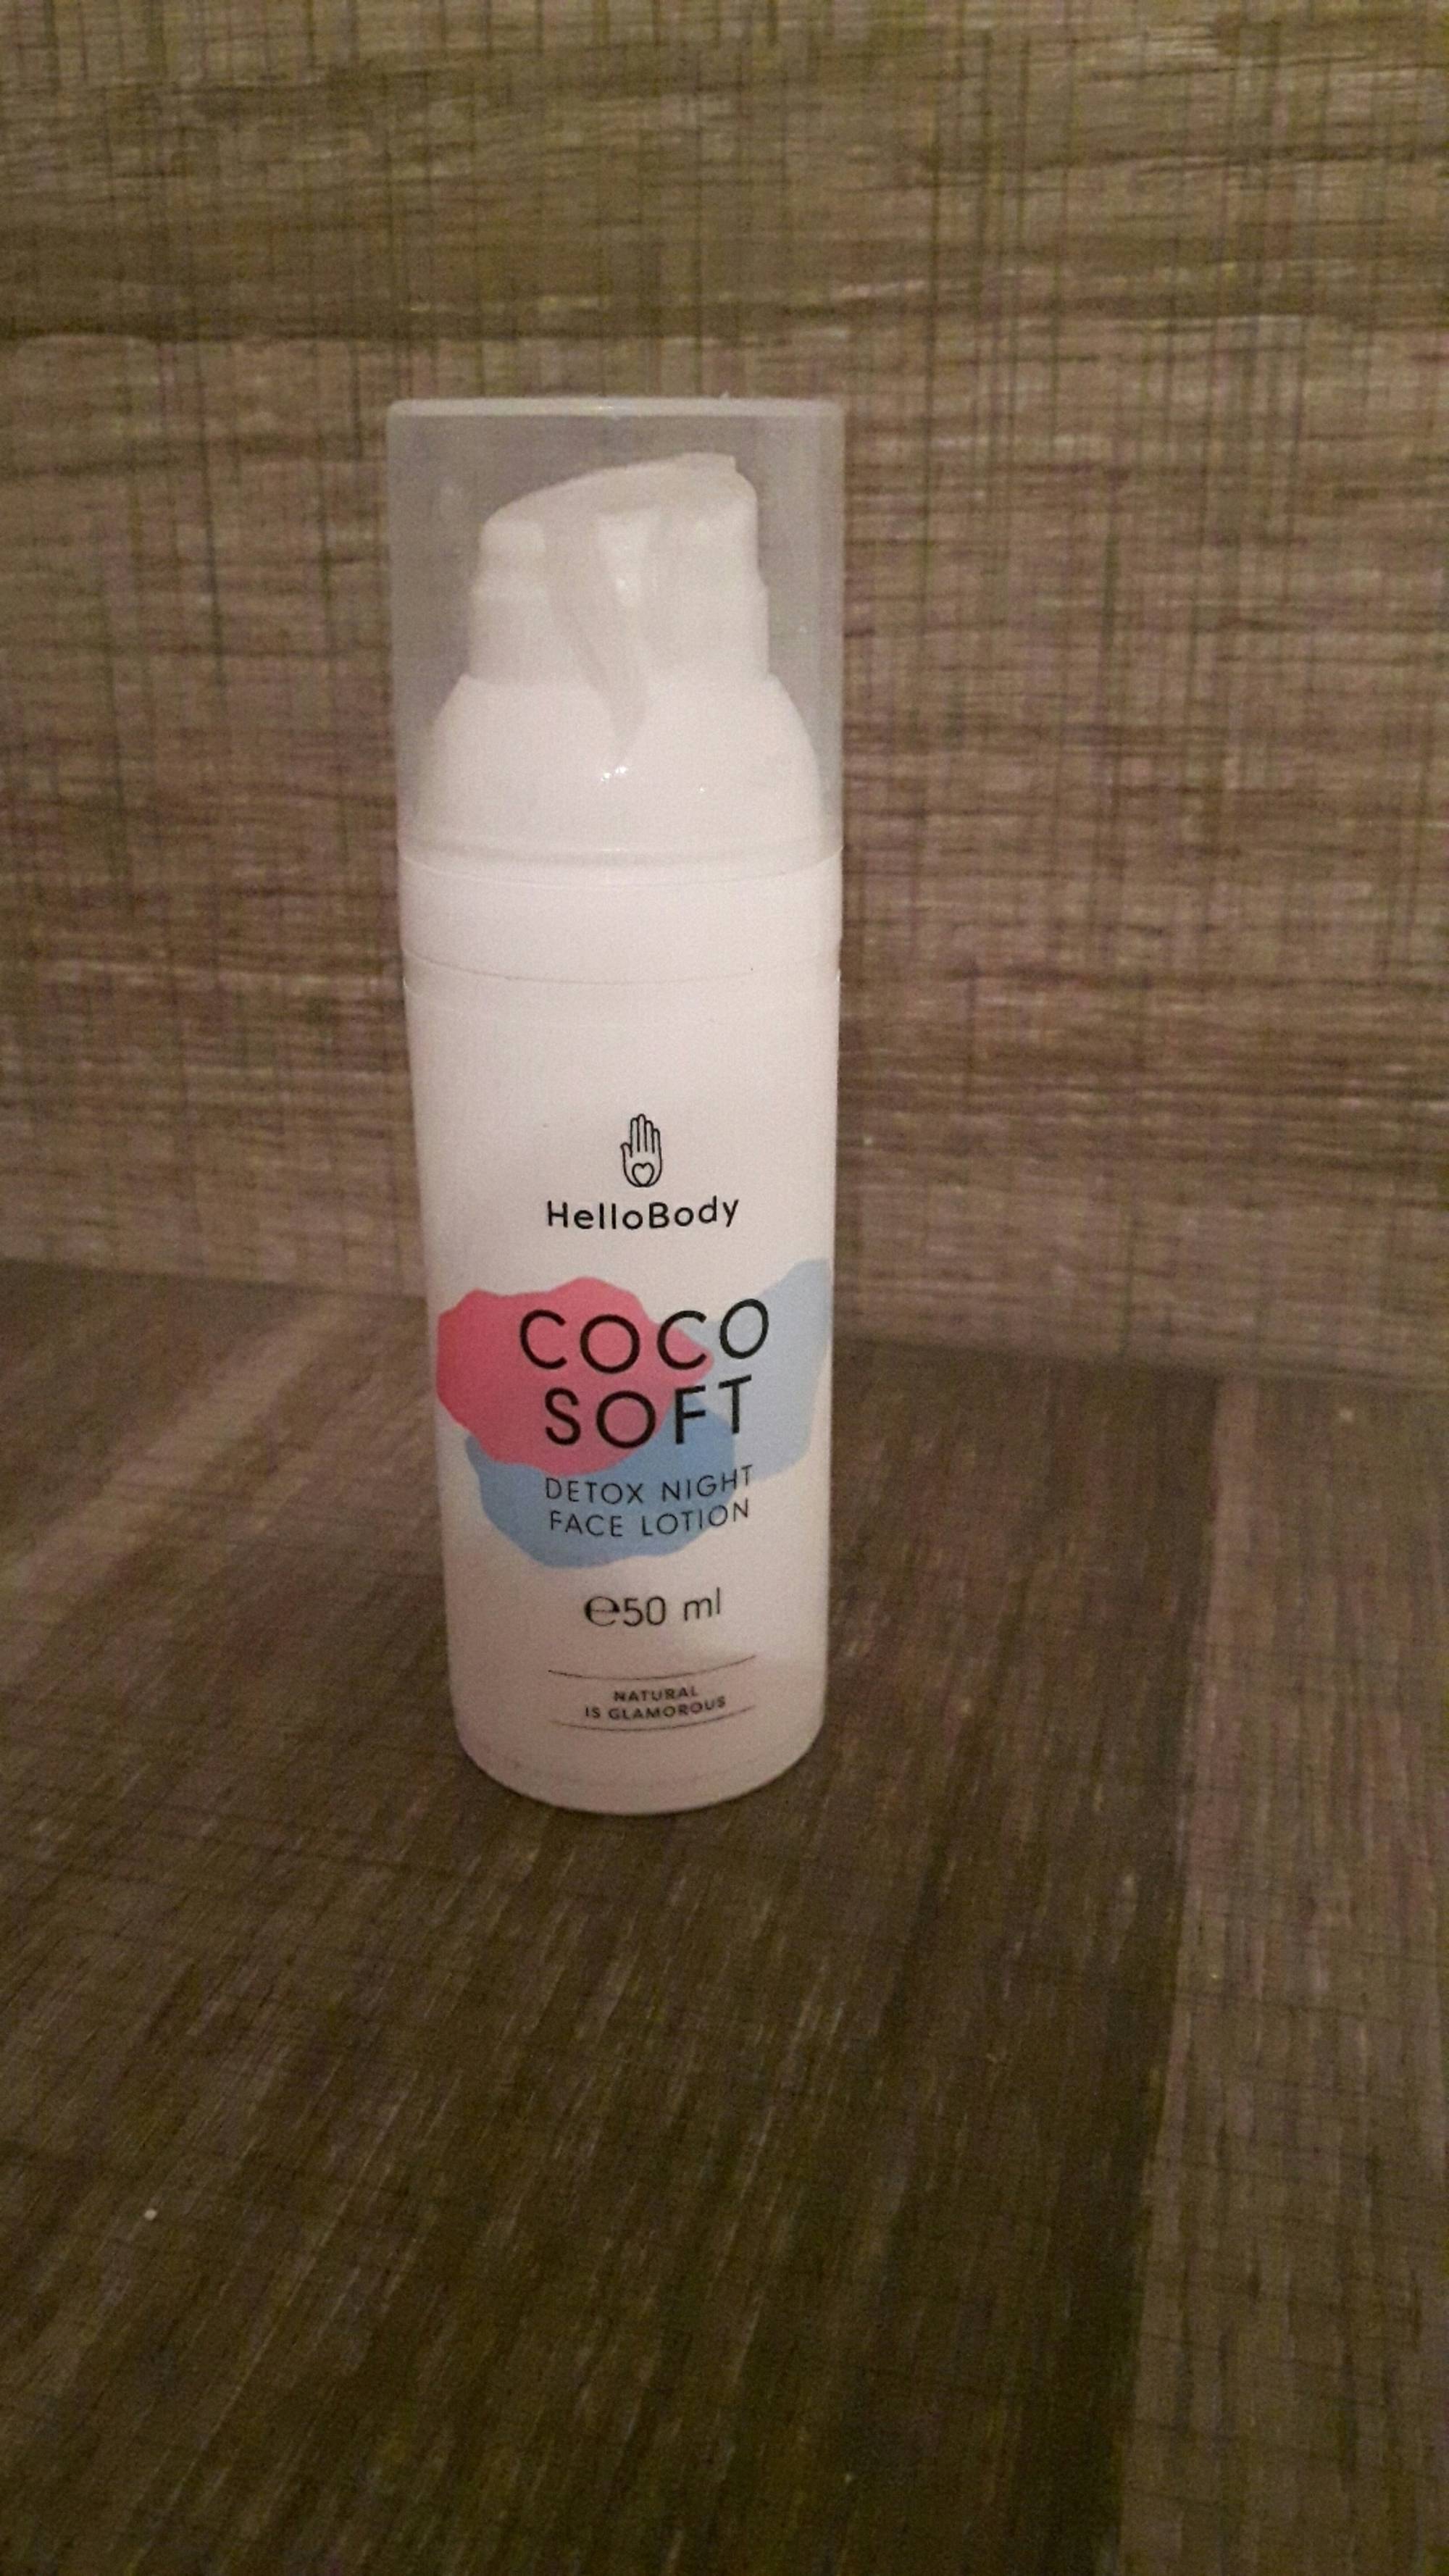 HELLOBODY - Coco soft detox night - Face lotion